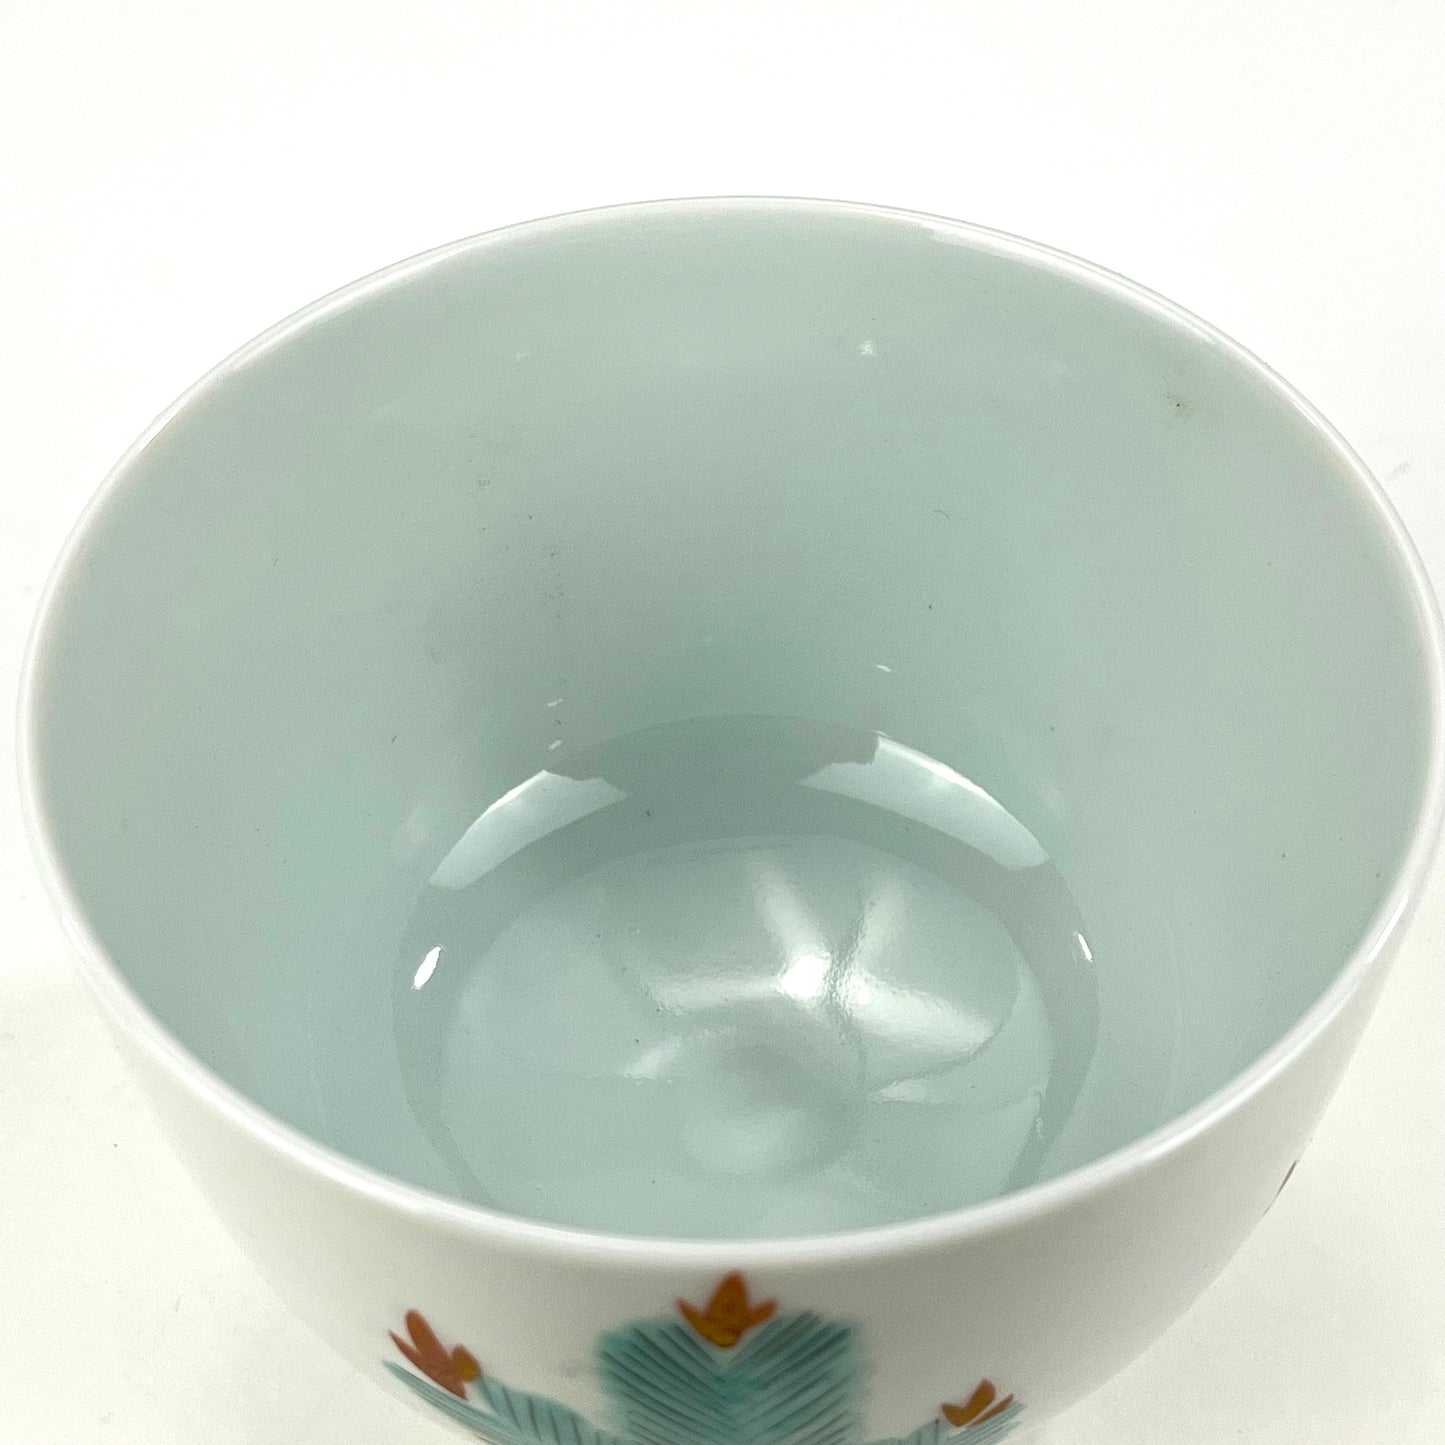 Tea Ceremony Chawan White Porcelain Tea Bowl w/ Pine Bows 4.5”